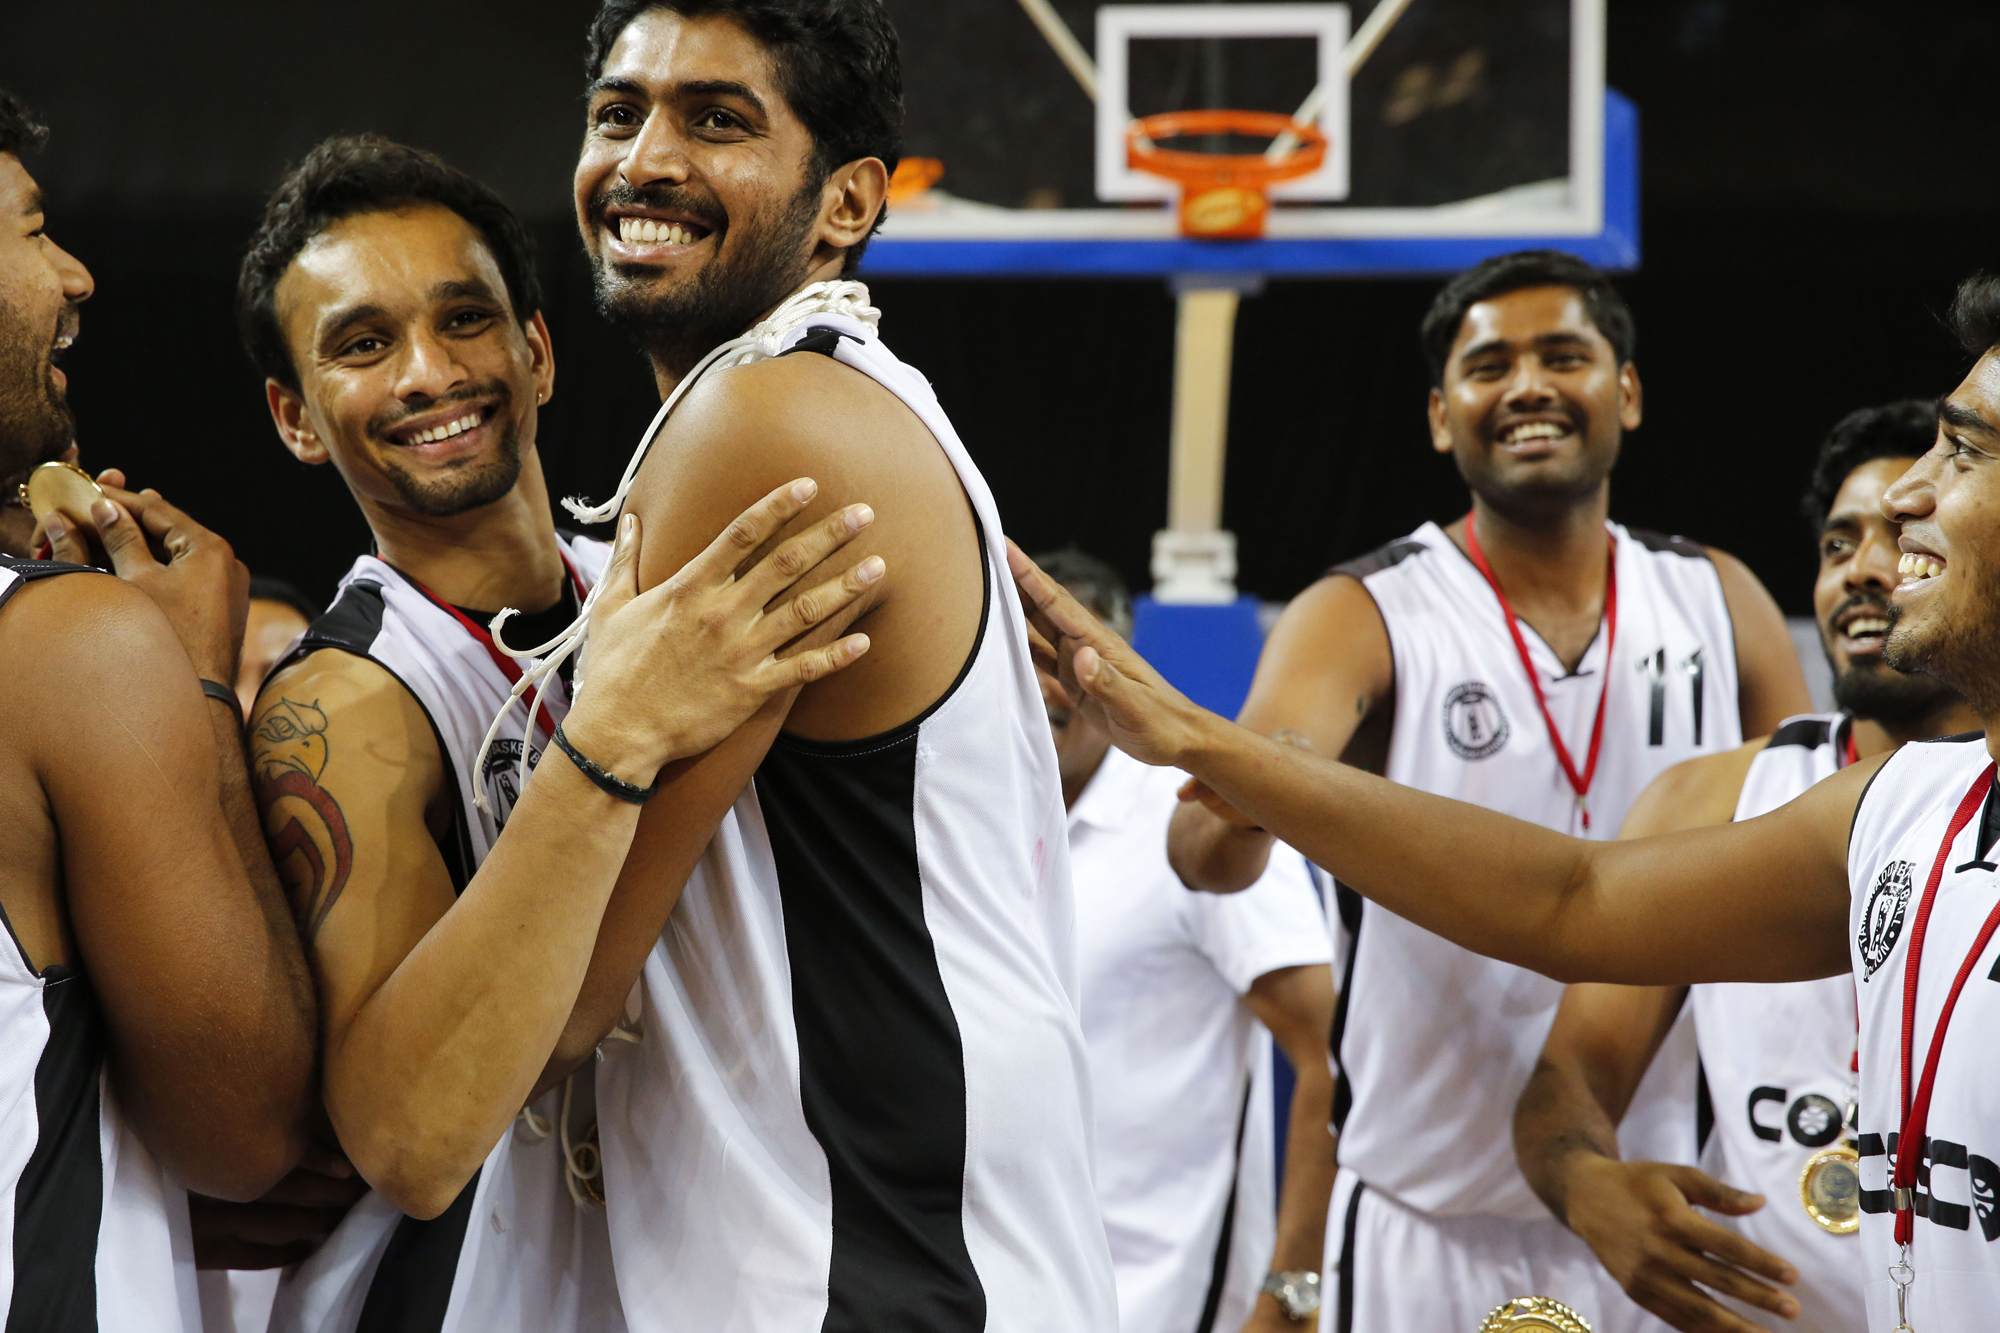 Pratham Singh, Riken Pethani, Akilan Pari and members of the Tamil Nadu team celebrate their victory at the 64th Senior National Basketball Championship for Men and Women, Delhi, 2014.